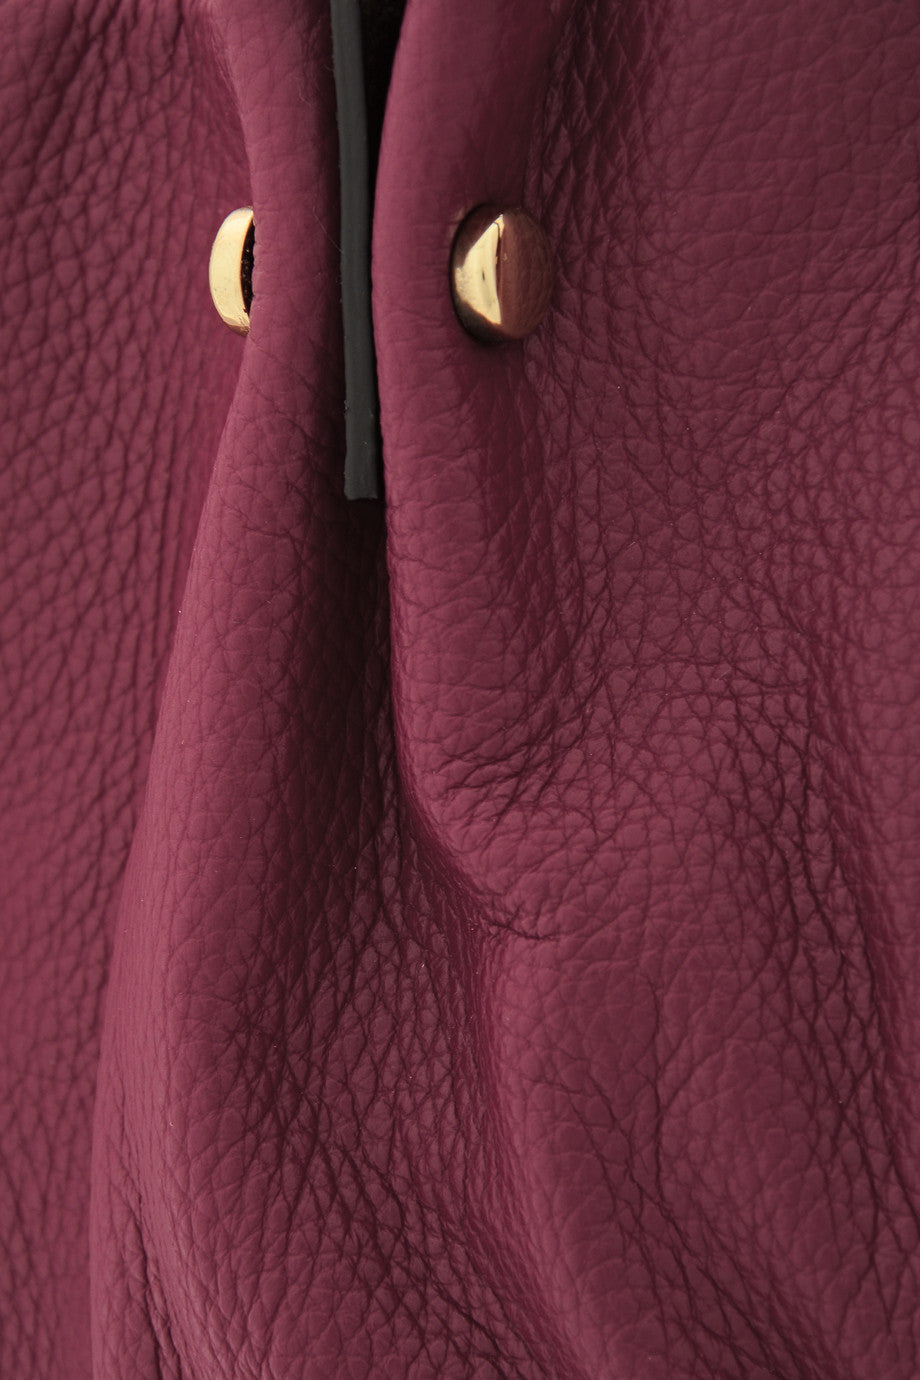 ADRIA Purple Leather Shoulder Bag